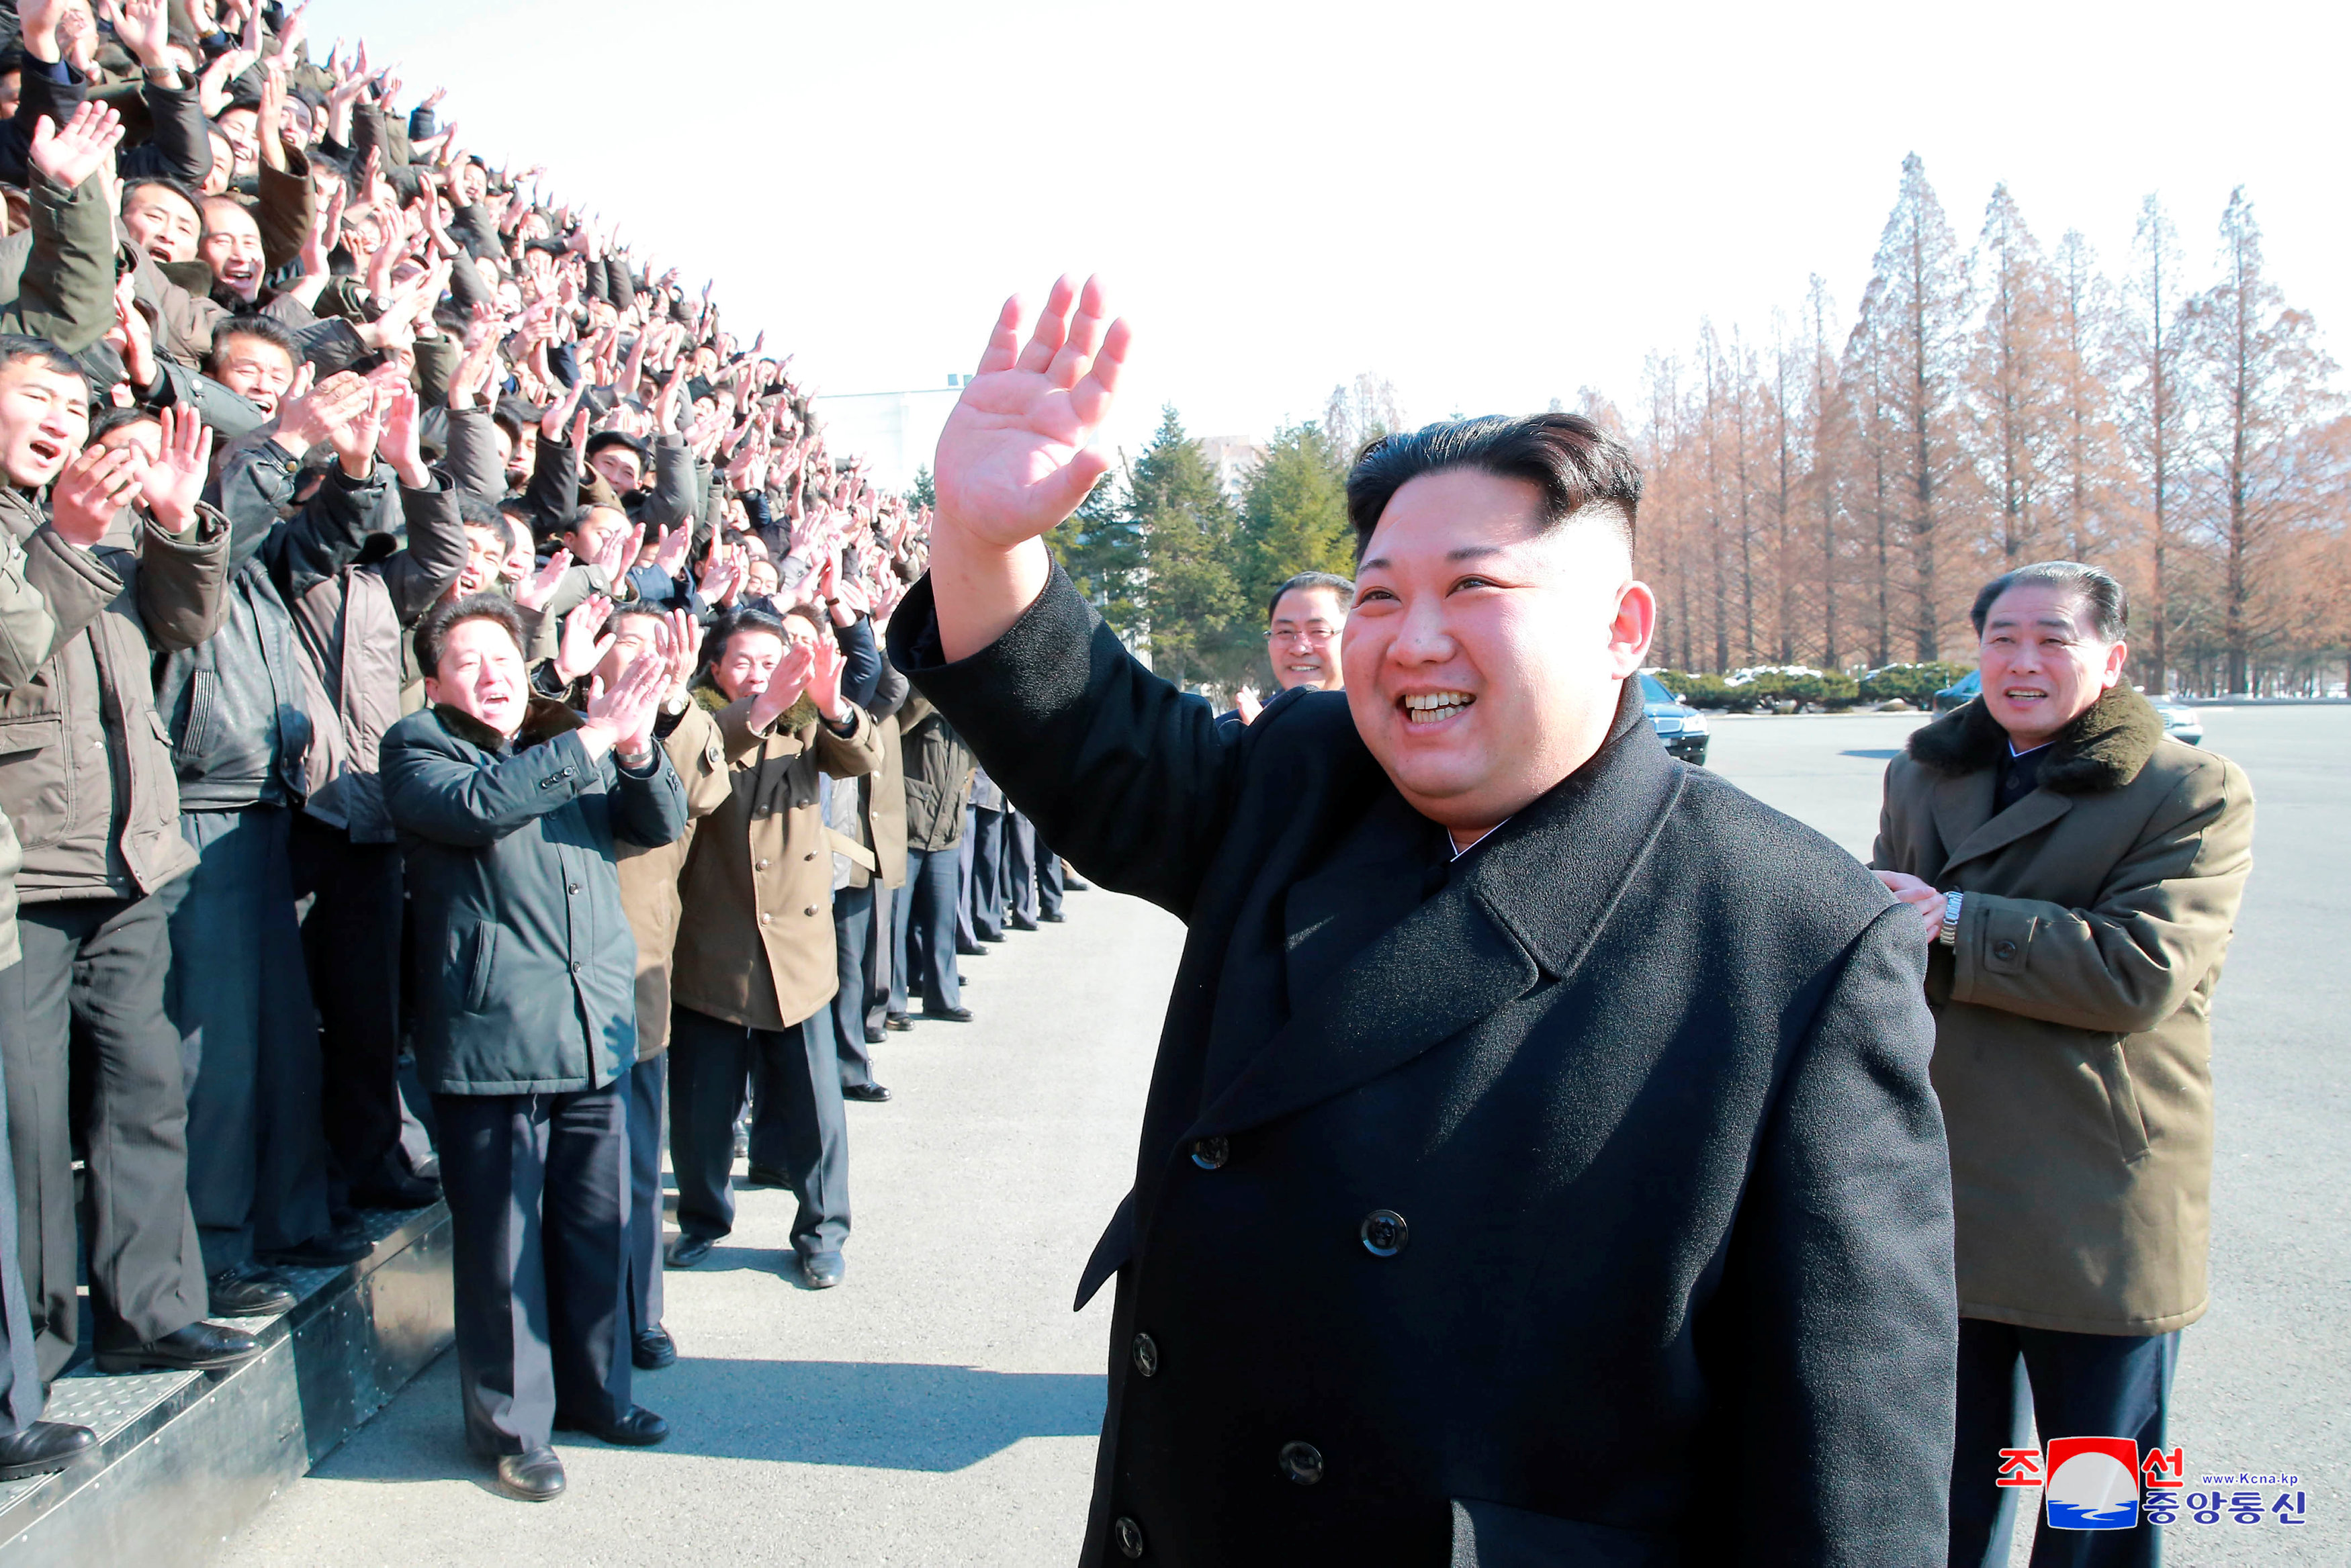 South Korea and North Korea to hold working-level talks on January 15